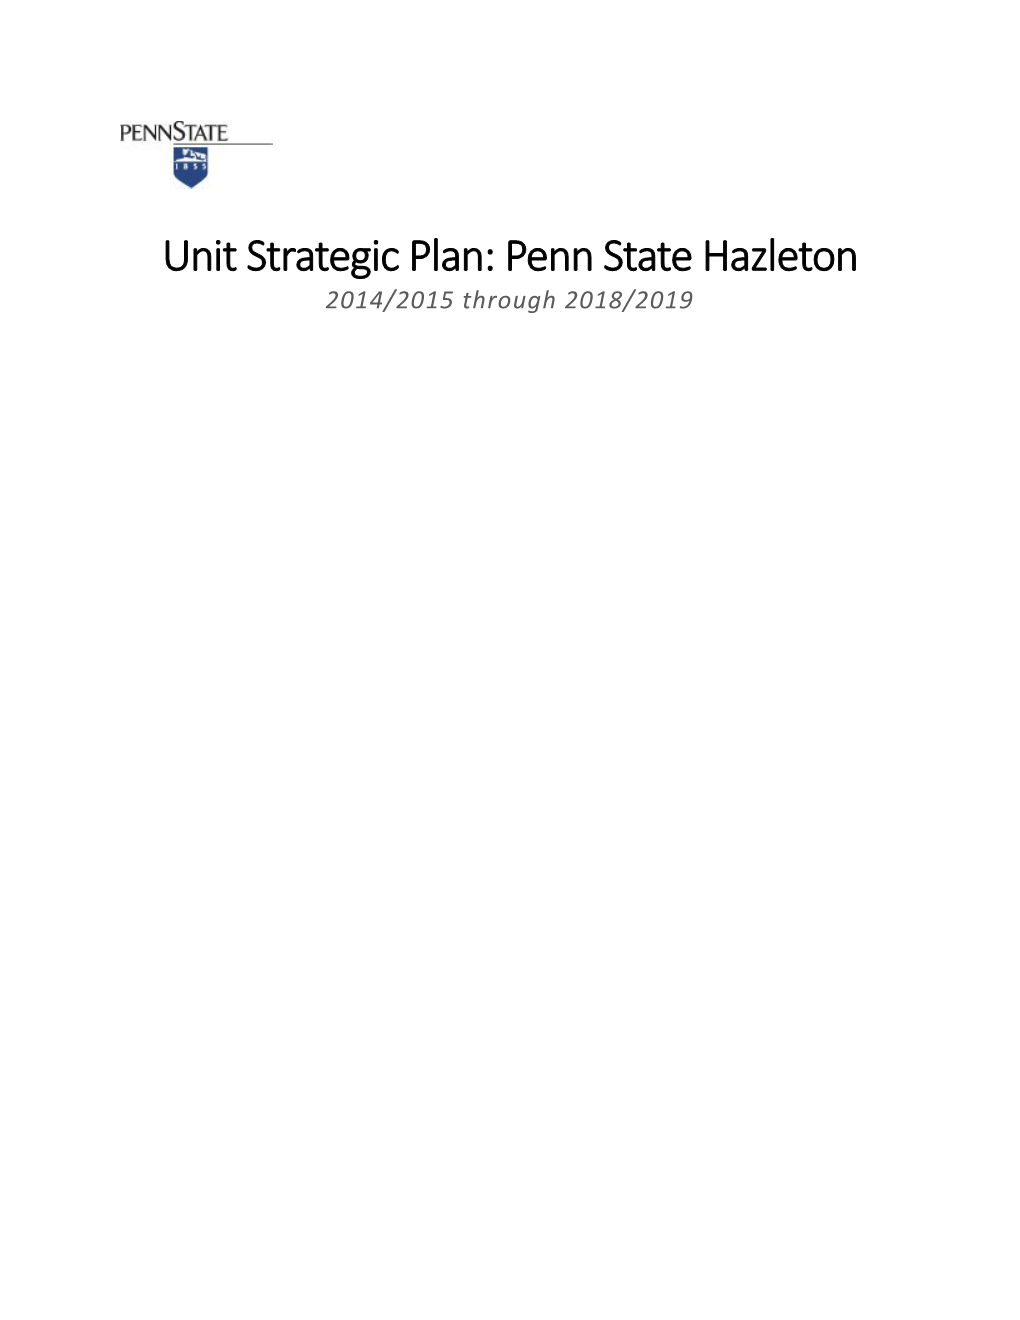 Penn State Hazleton Strategic Plan